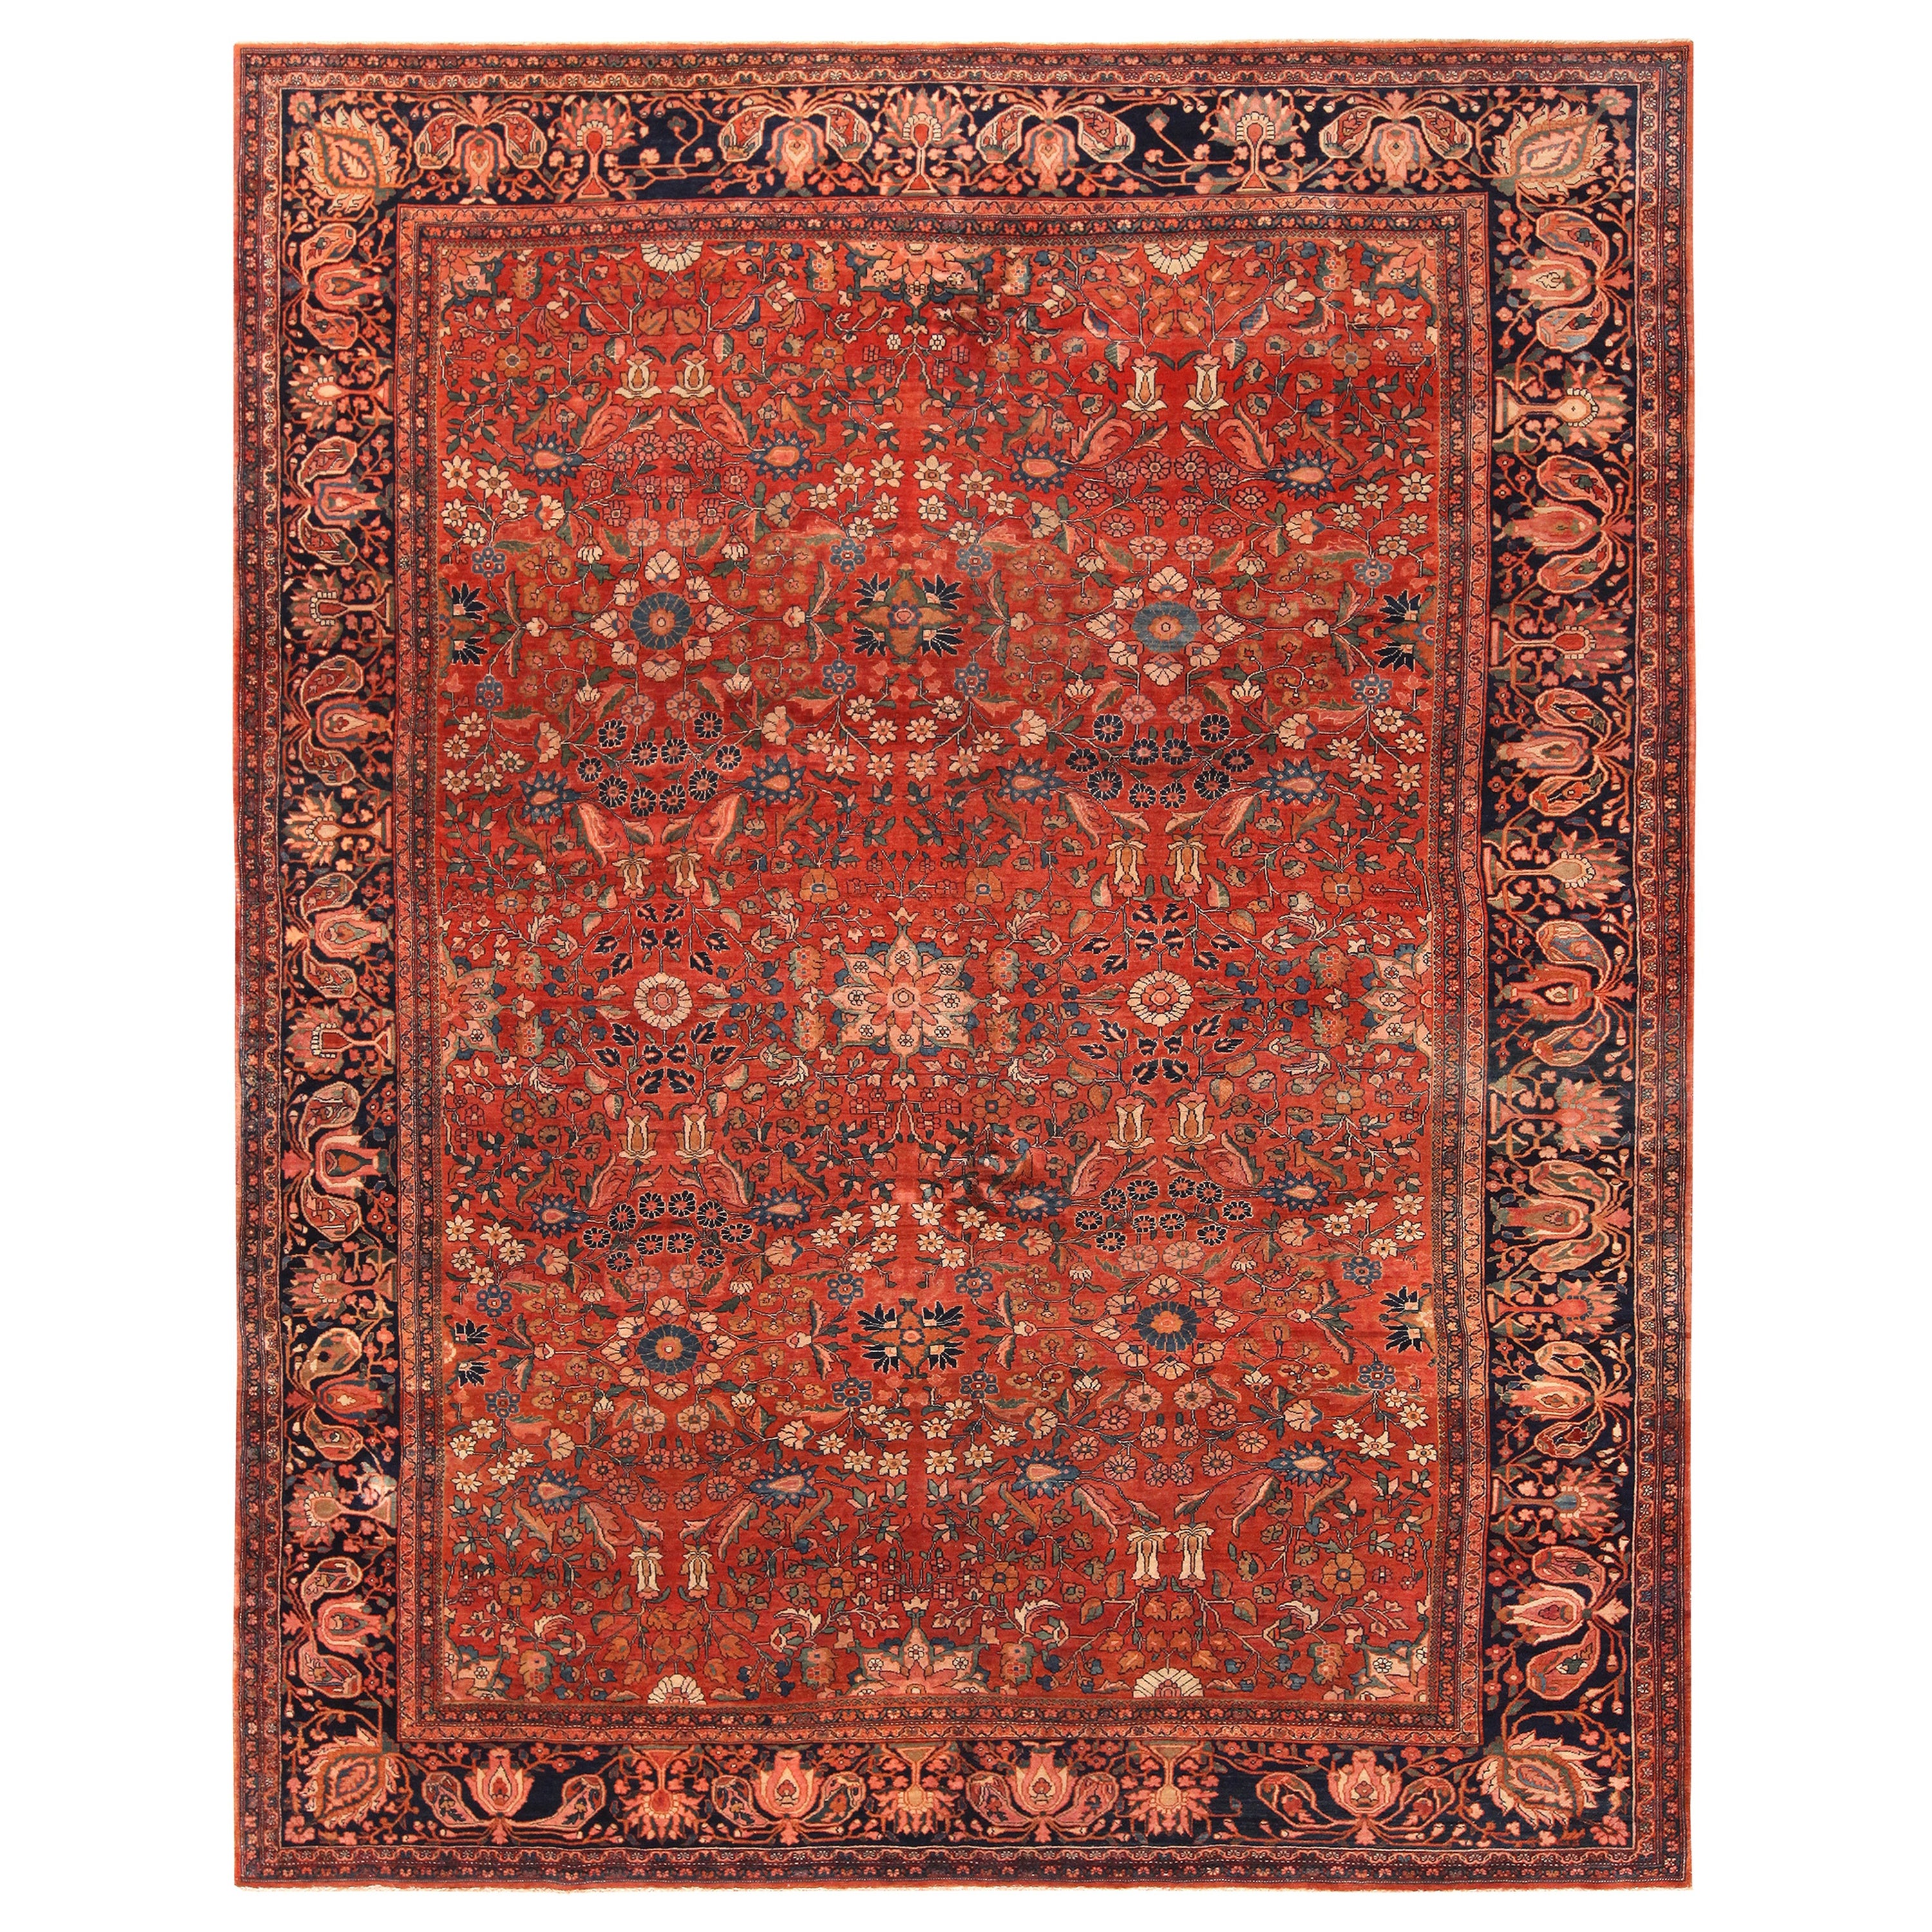 Antiker persischer Sarouk Farahan-Teppich aus Sarouk. 9 Fuß 3 Zoll x 11 Fuß 6 Zoll